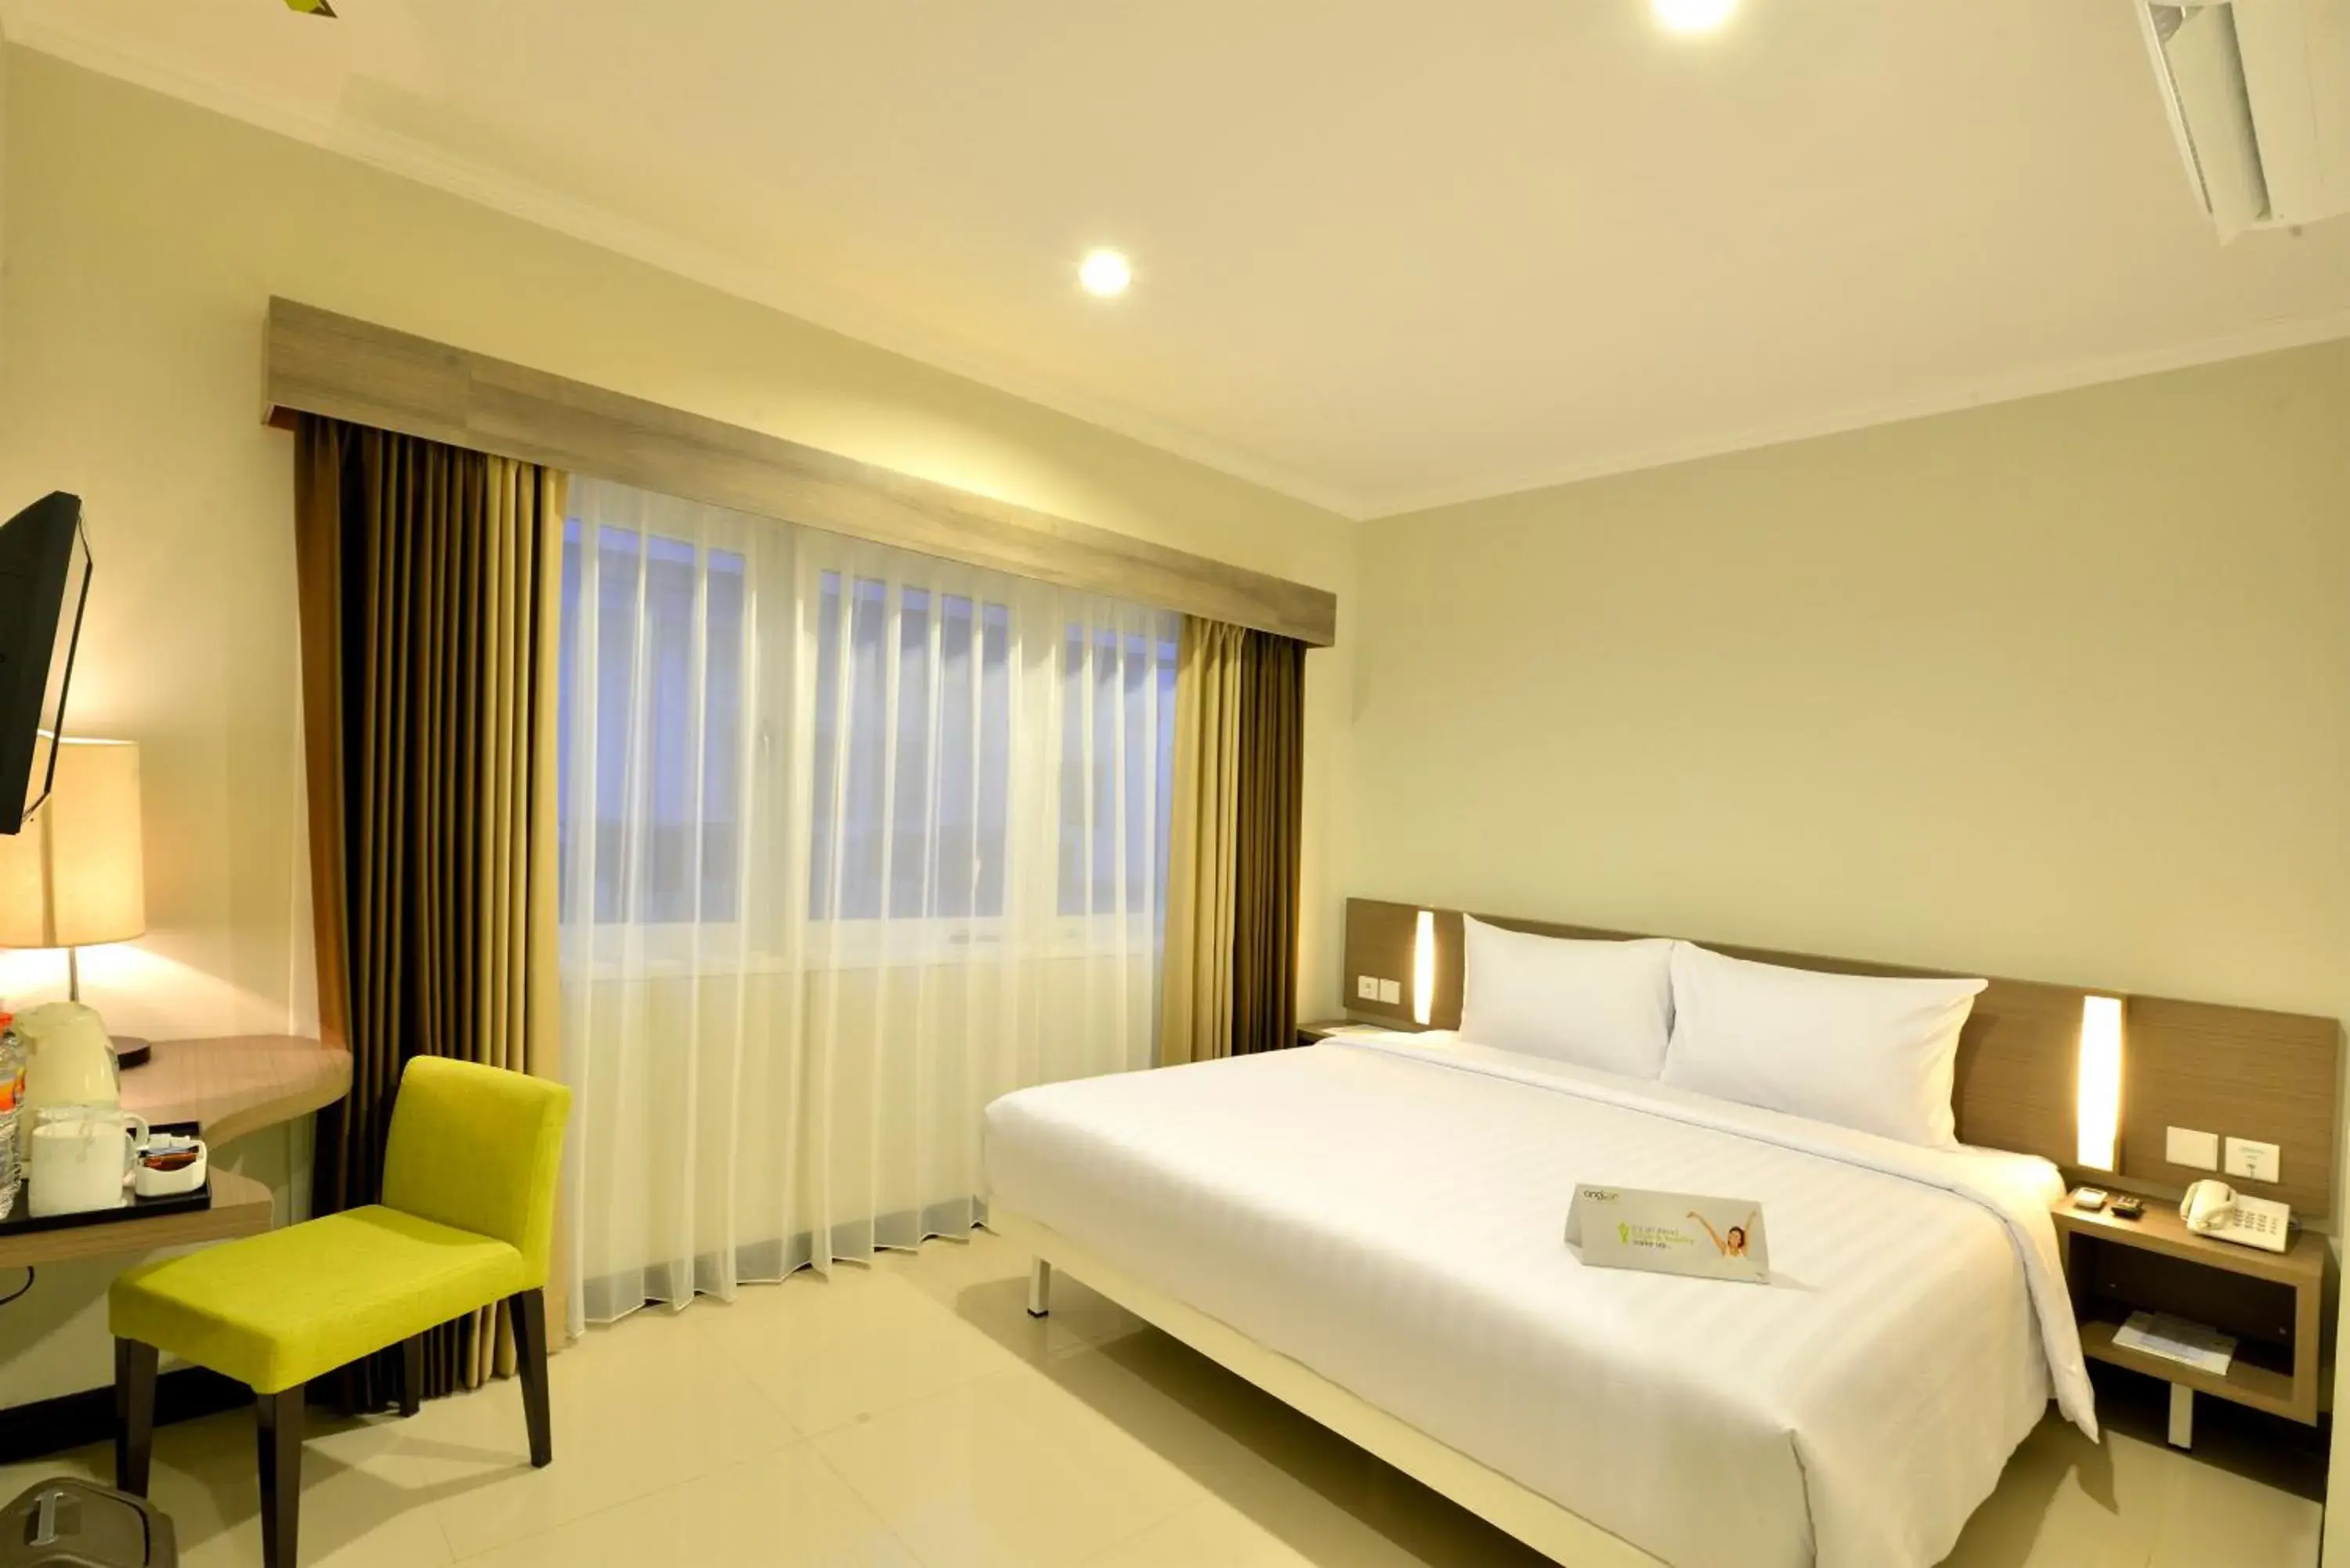 Photo of the whole room, Room Photo in Whiz Prime Hotel Darmo Harapan Surabaya